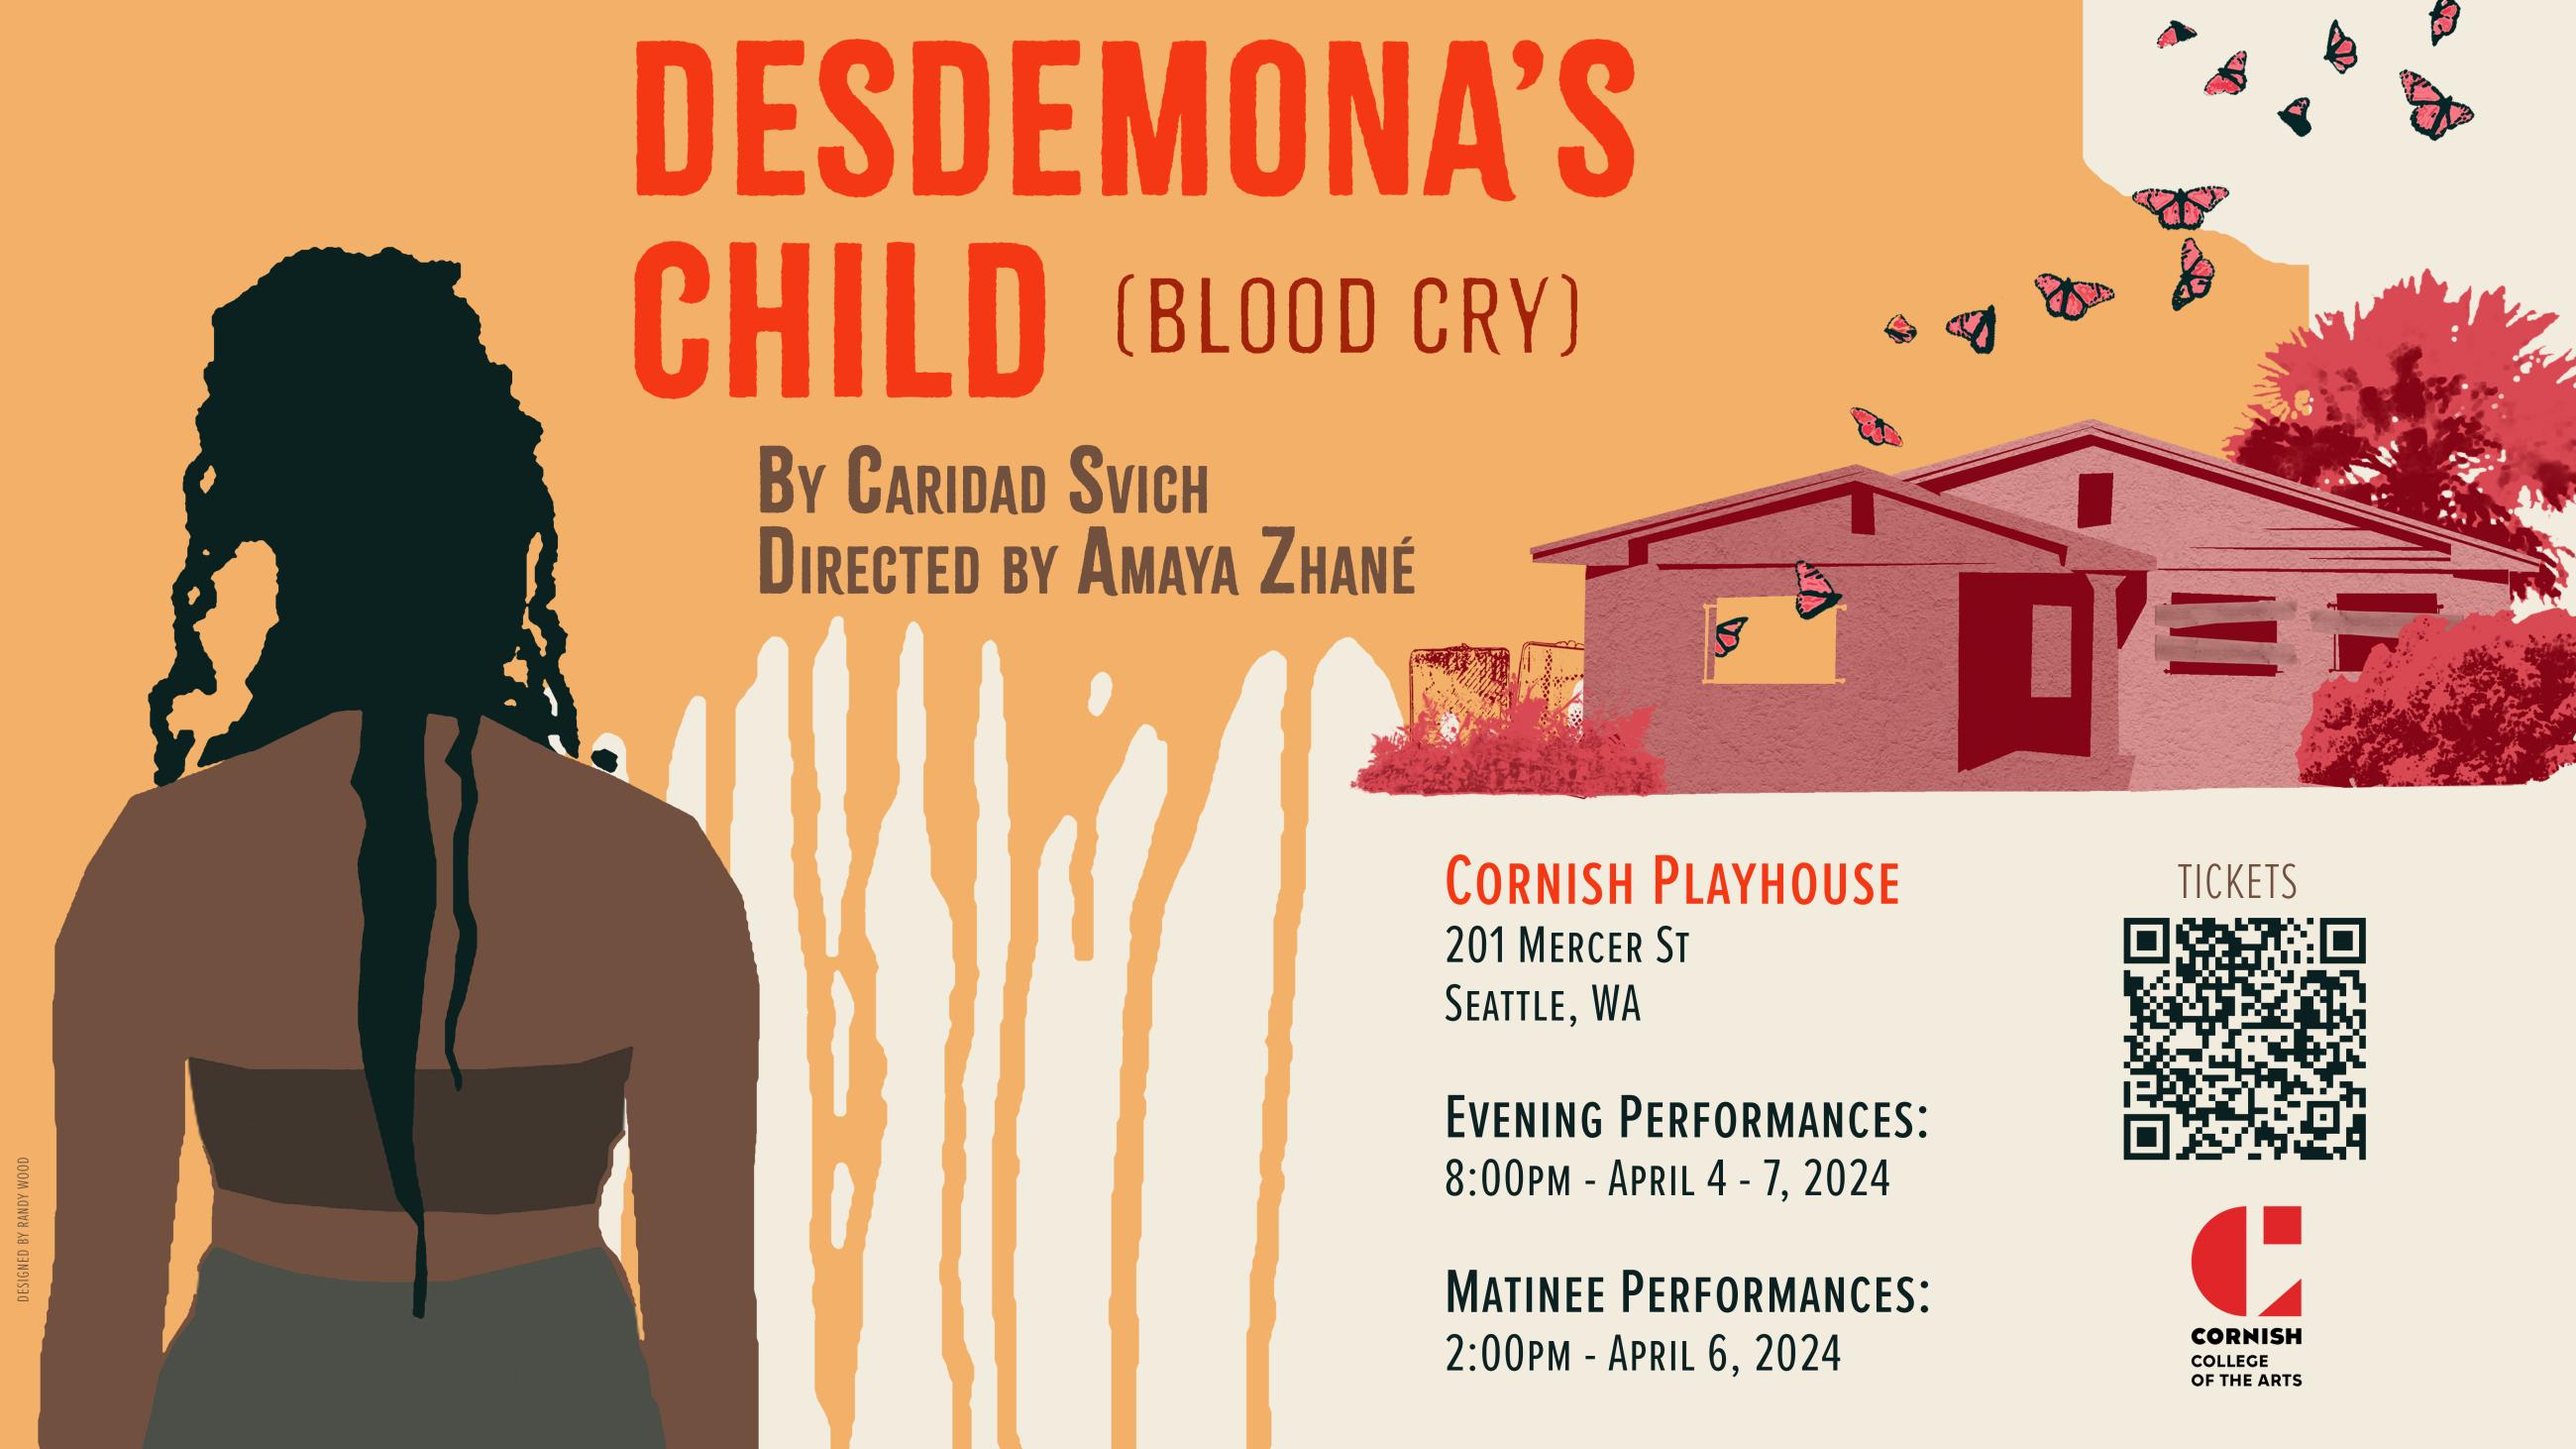 poster for desdemona's child